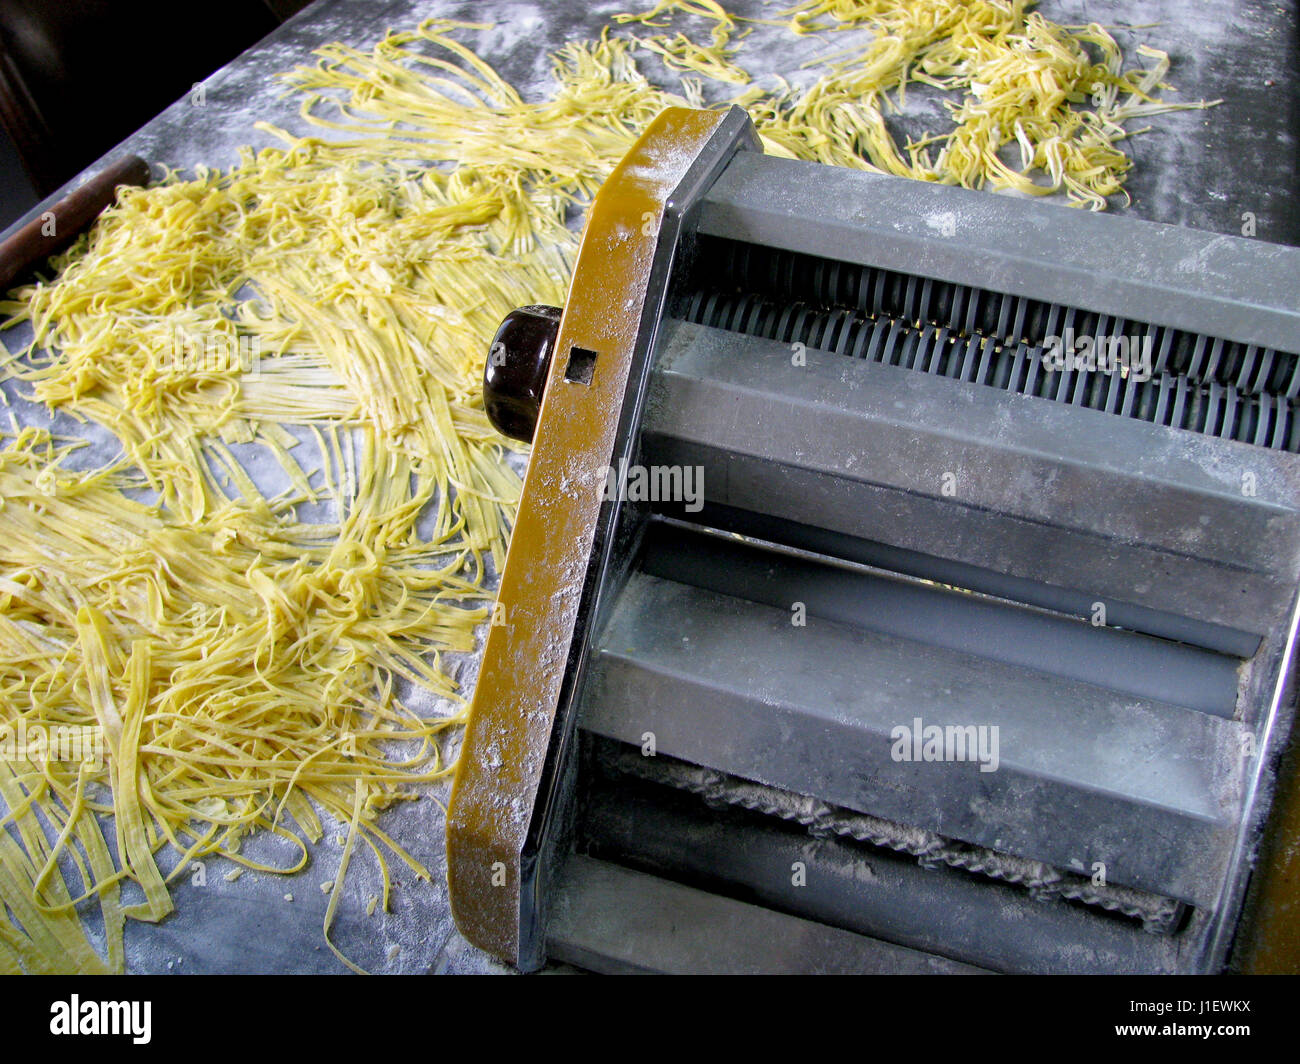 https://c8.alamy.com/comp/J1EWKX/vintage-metal-pasta-maker-machine-with-fresh-dough-J1EWKX.jpg